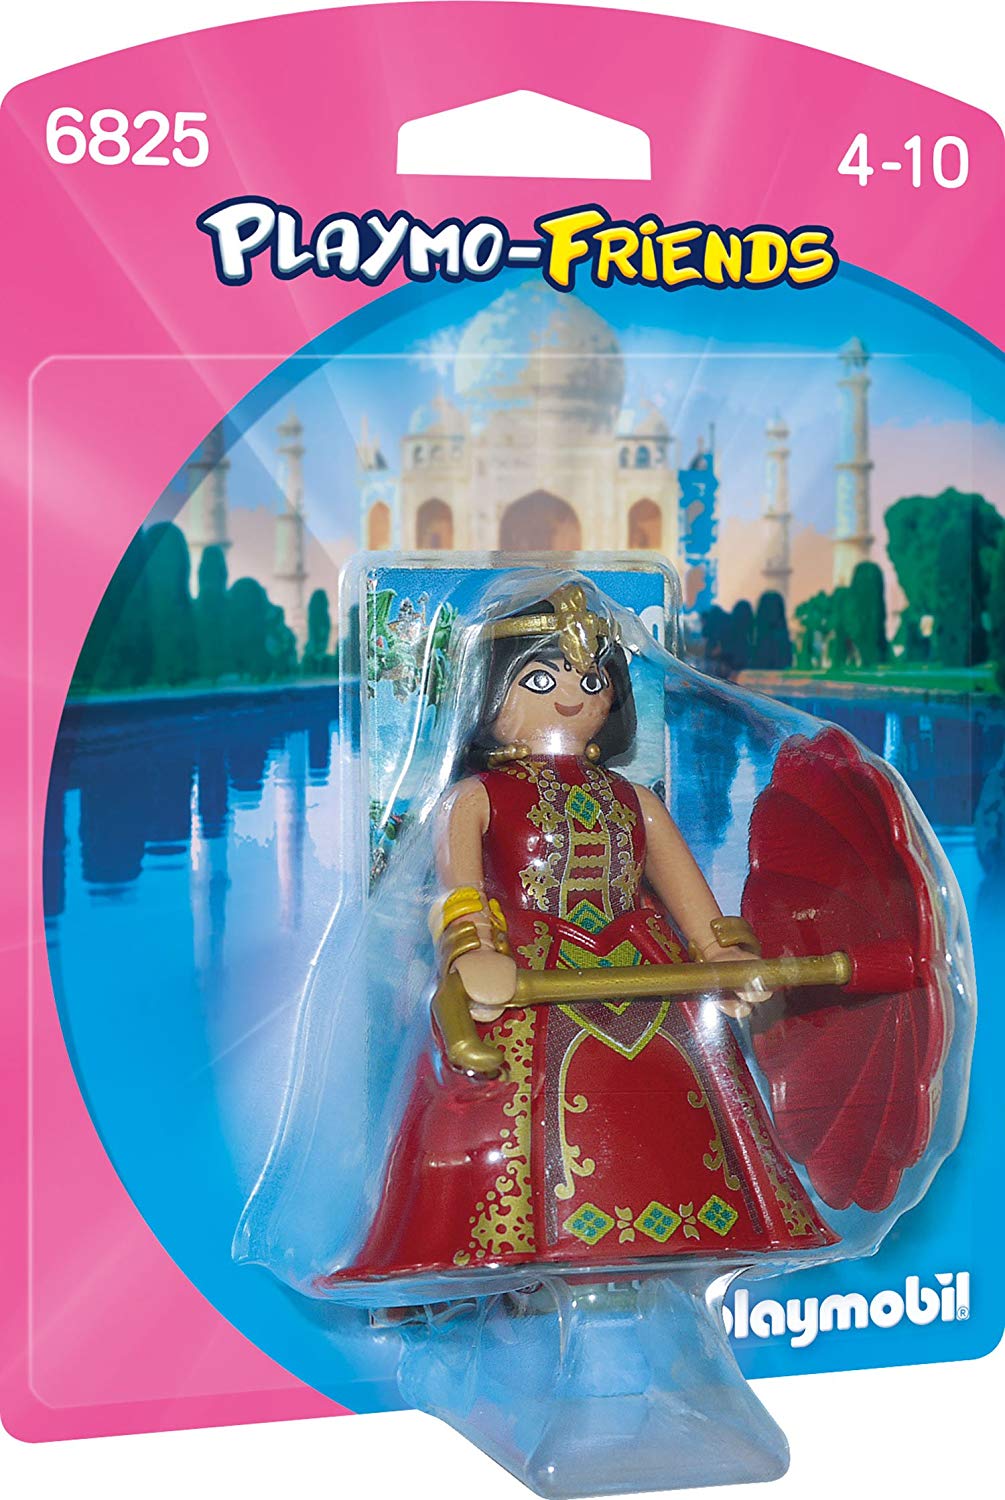 Playmobil 6825 Playmo Friends Indian Princess Figure